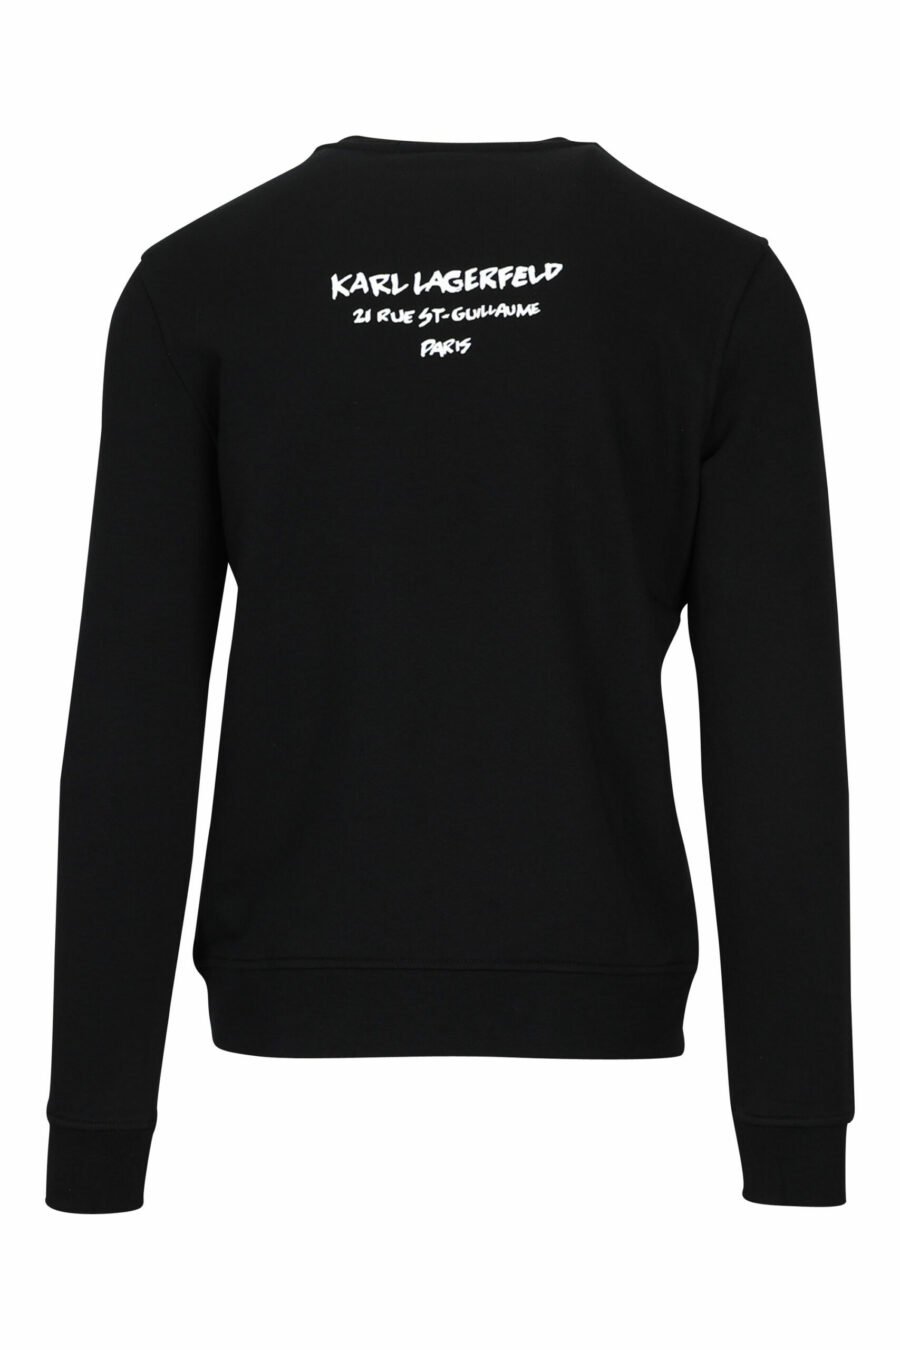 Black sweatshirt with "karl" camouflage profile - 4062226395816 1 scaled